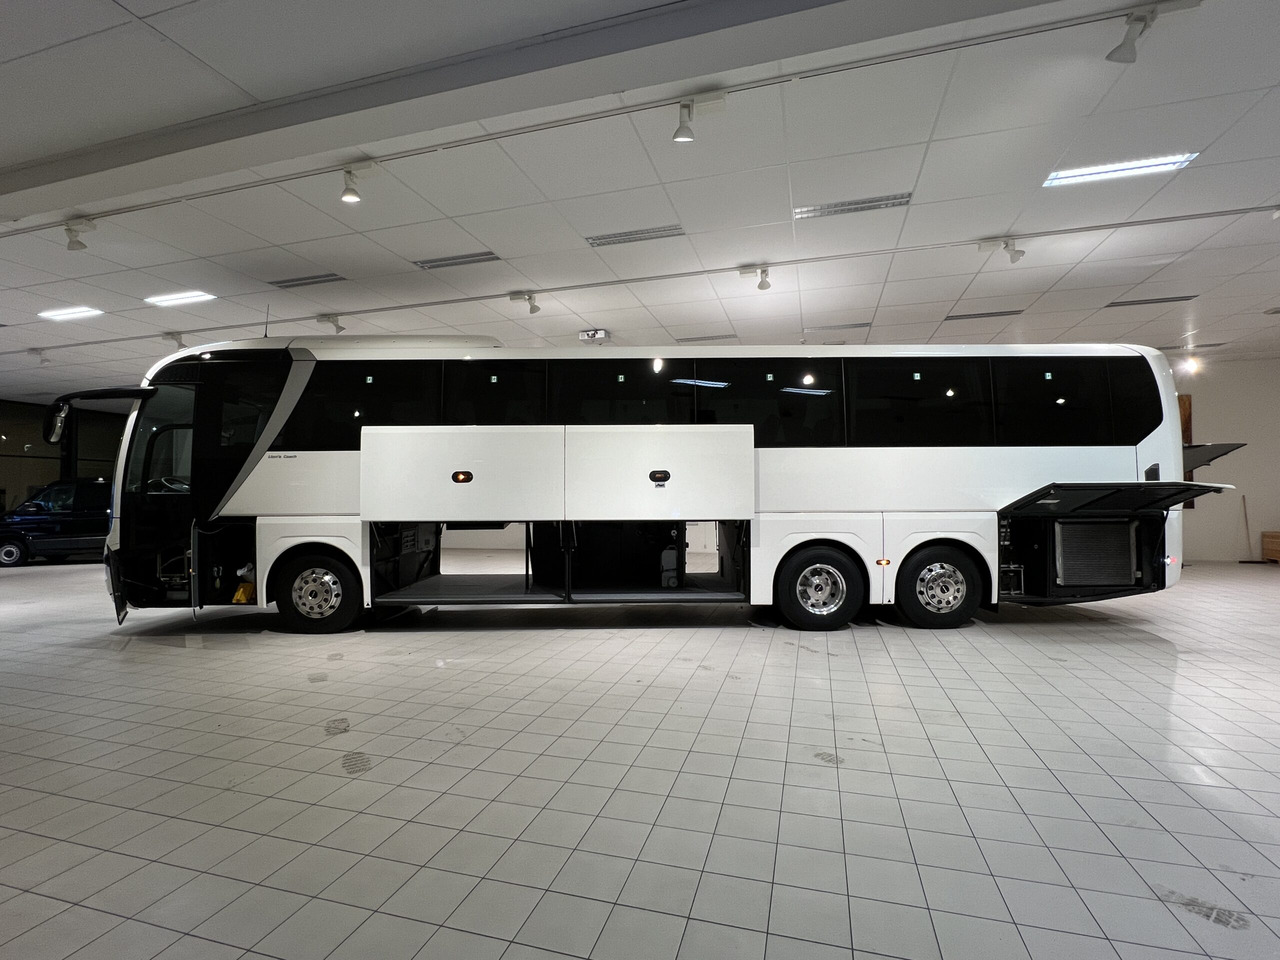 Turistički autobus MAN Lions Coach R09 Euro 6E (Dark Edition): slika Turistički autobus MAN Lions Coach R09 Euro 6E (Dark Edition)